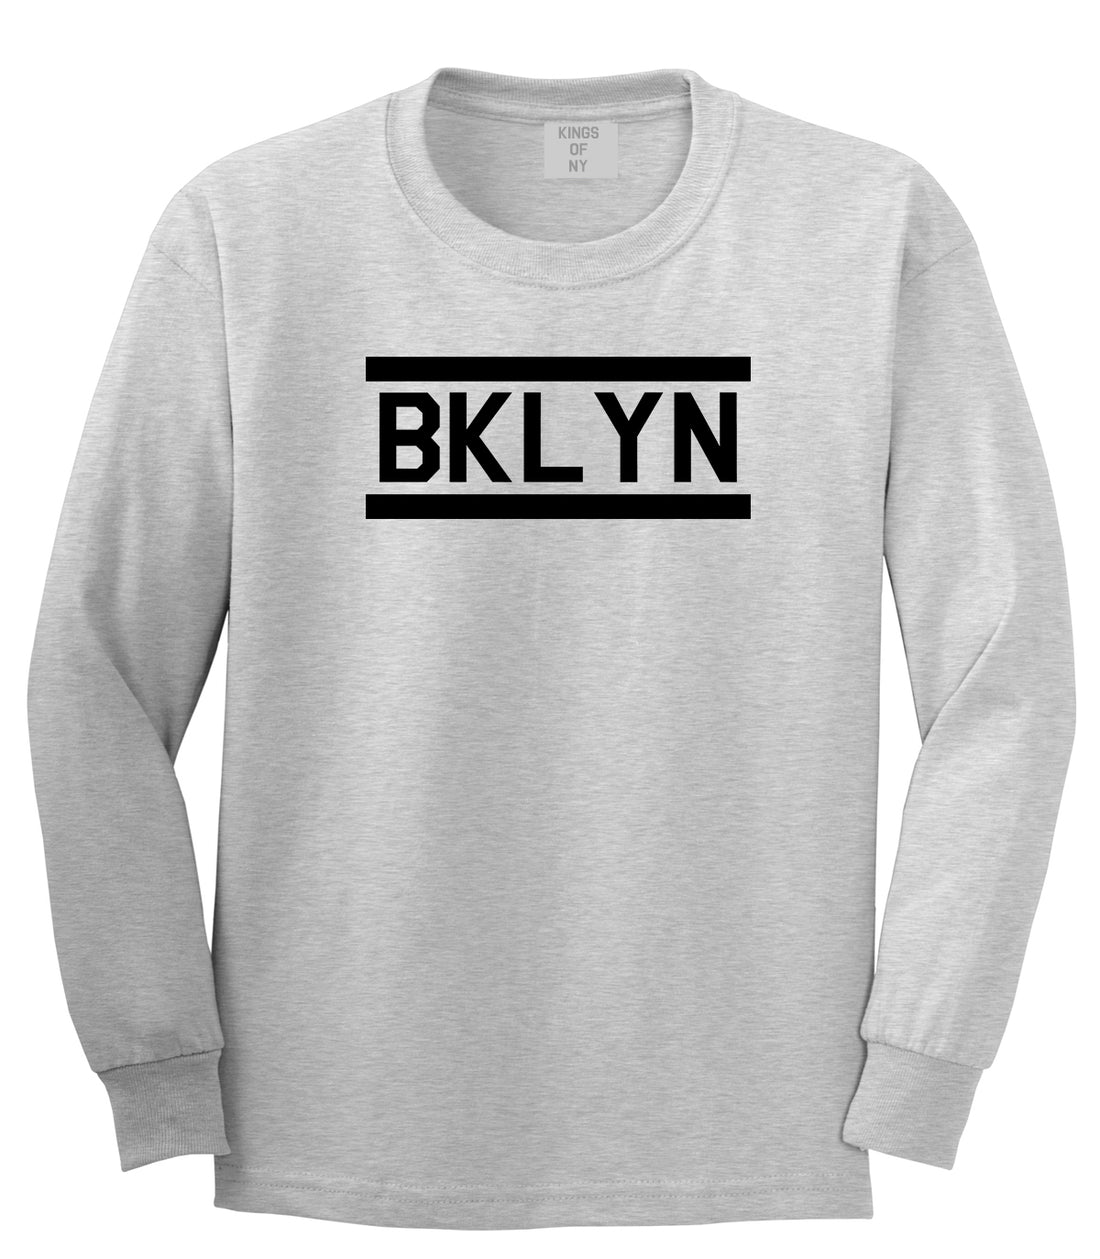 BKLYN Brooklyn Mens Long Sleeve T-Shirt Grey by Kings Of NY